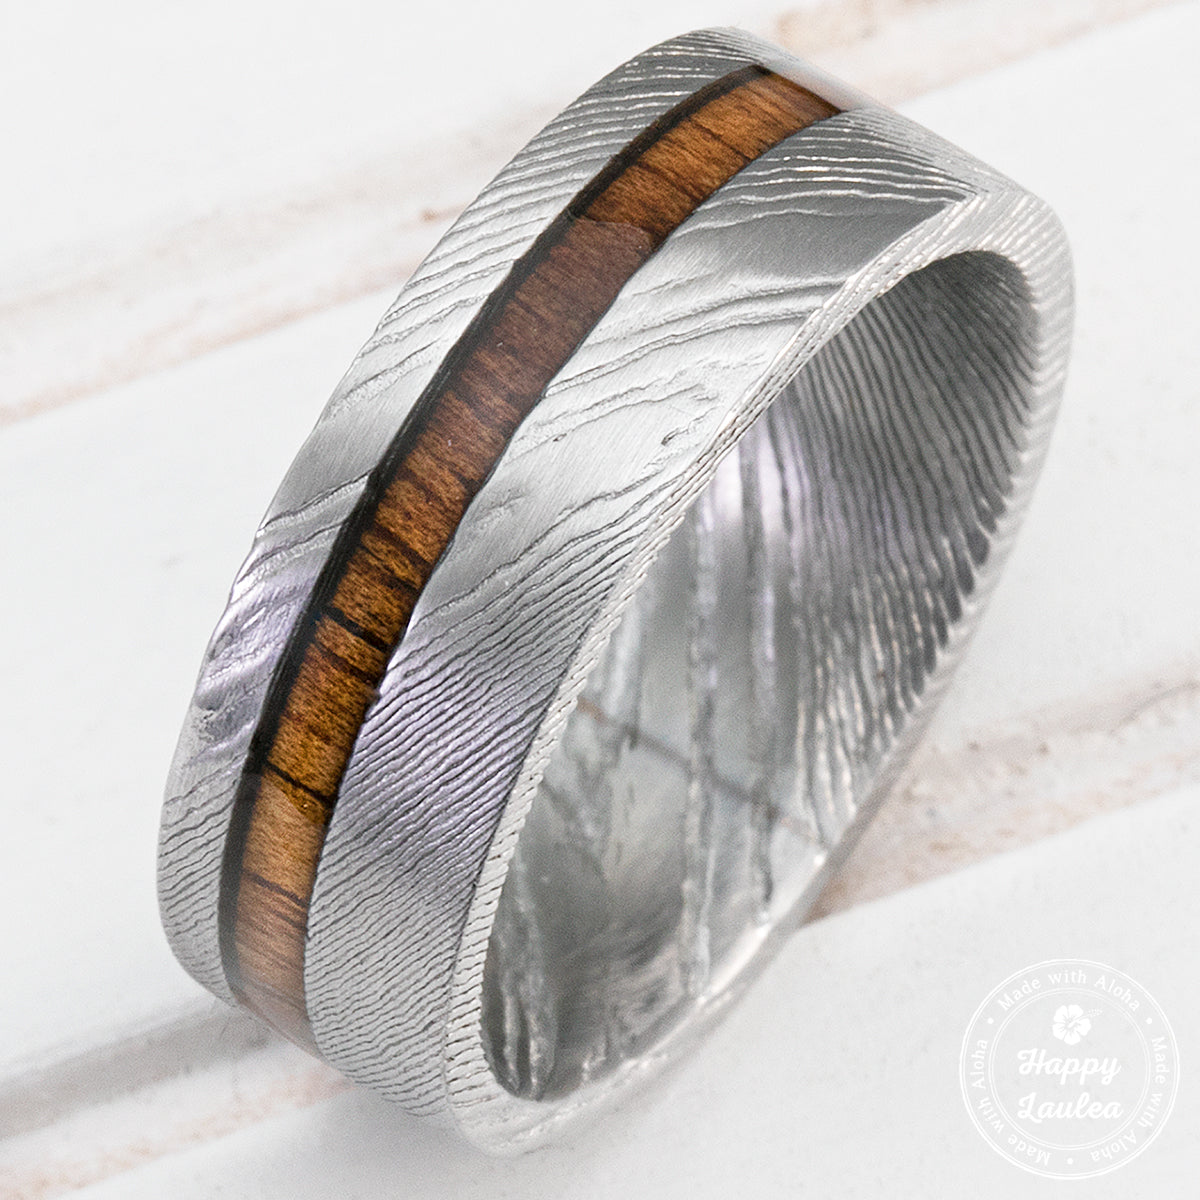 Damascus Steel Ring with Hawaiian Koa Wood Offset Inlay - 8mm, Flat Shape, Comfort Fitment